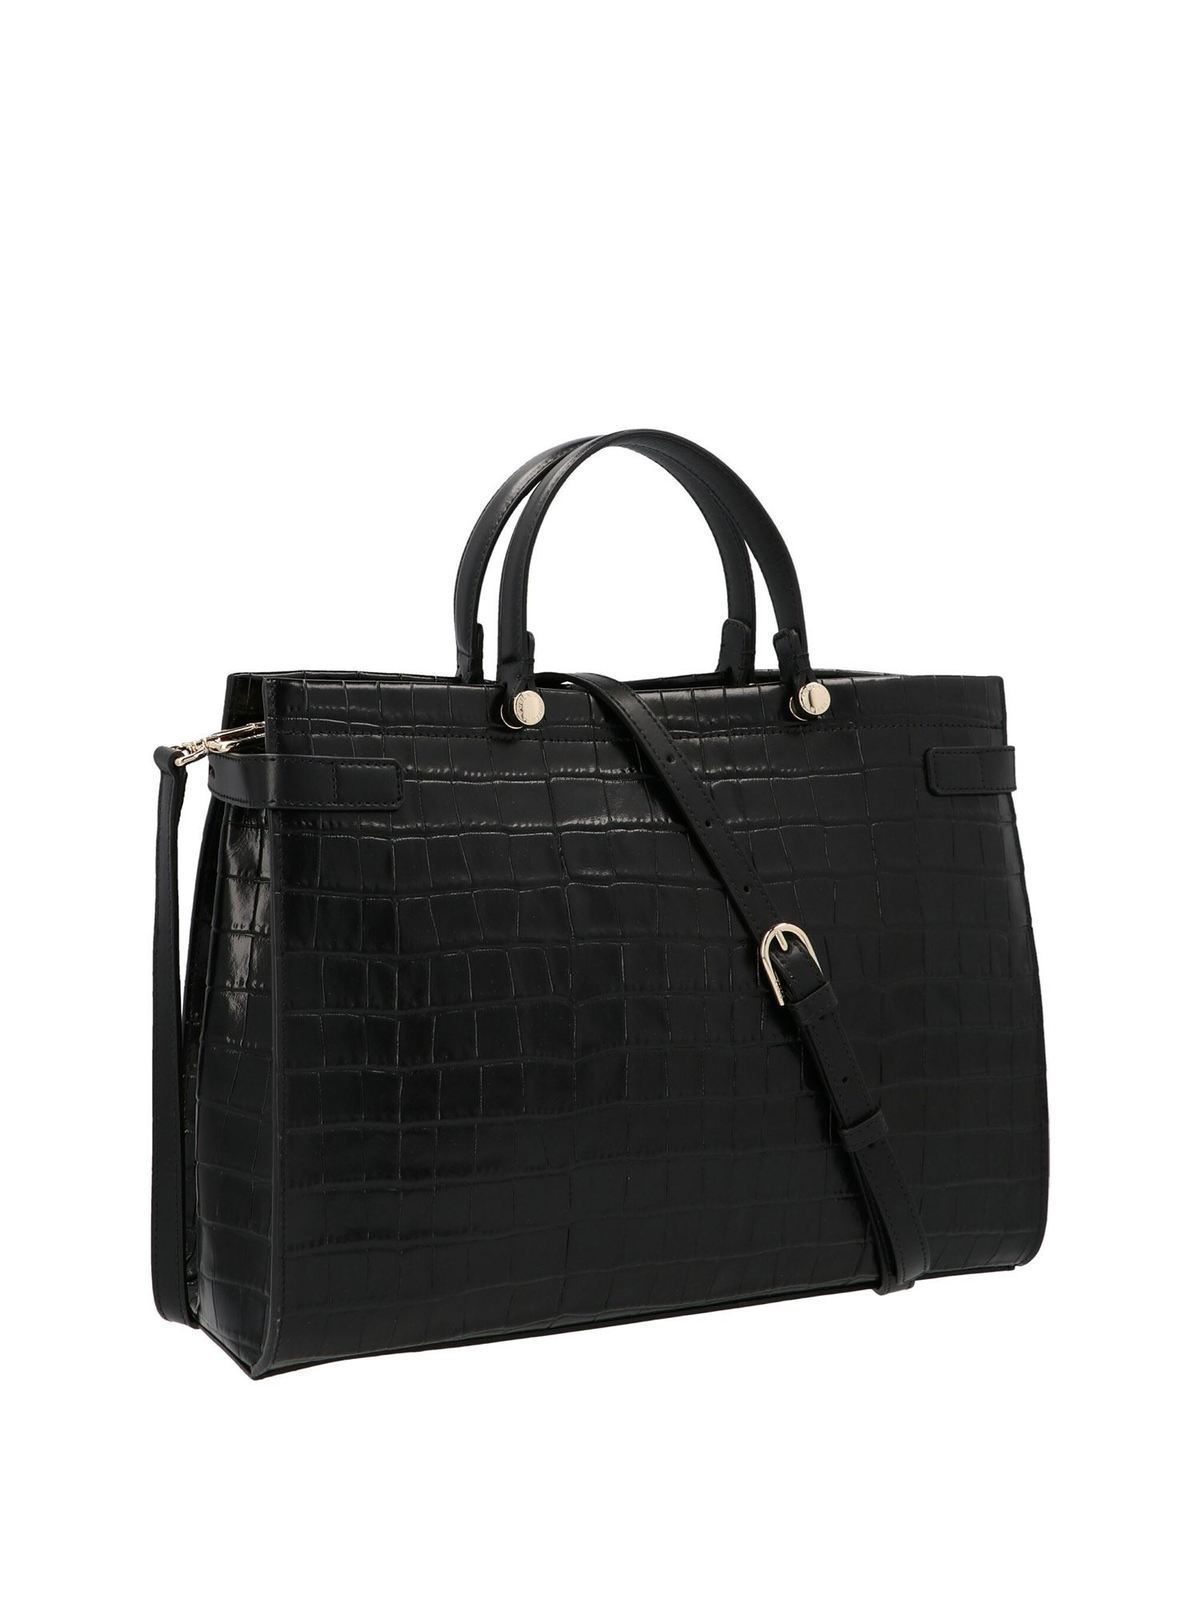 Totes bags Furla - Crocodile effect Lady M L bag in black